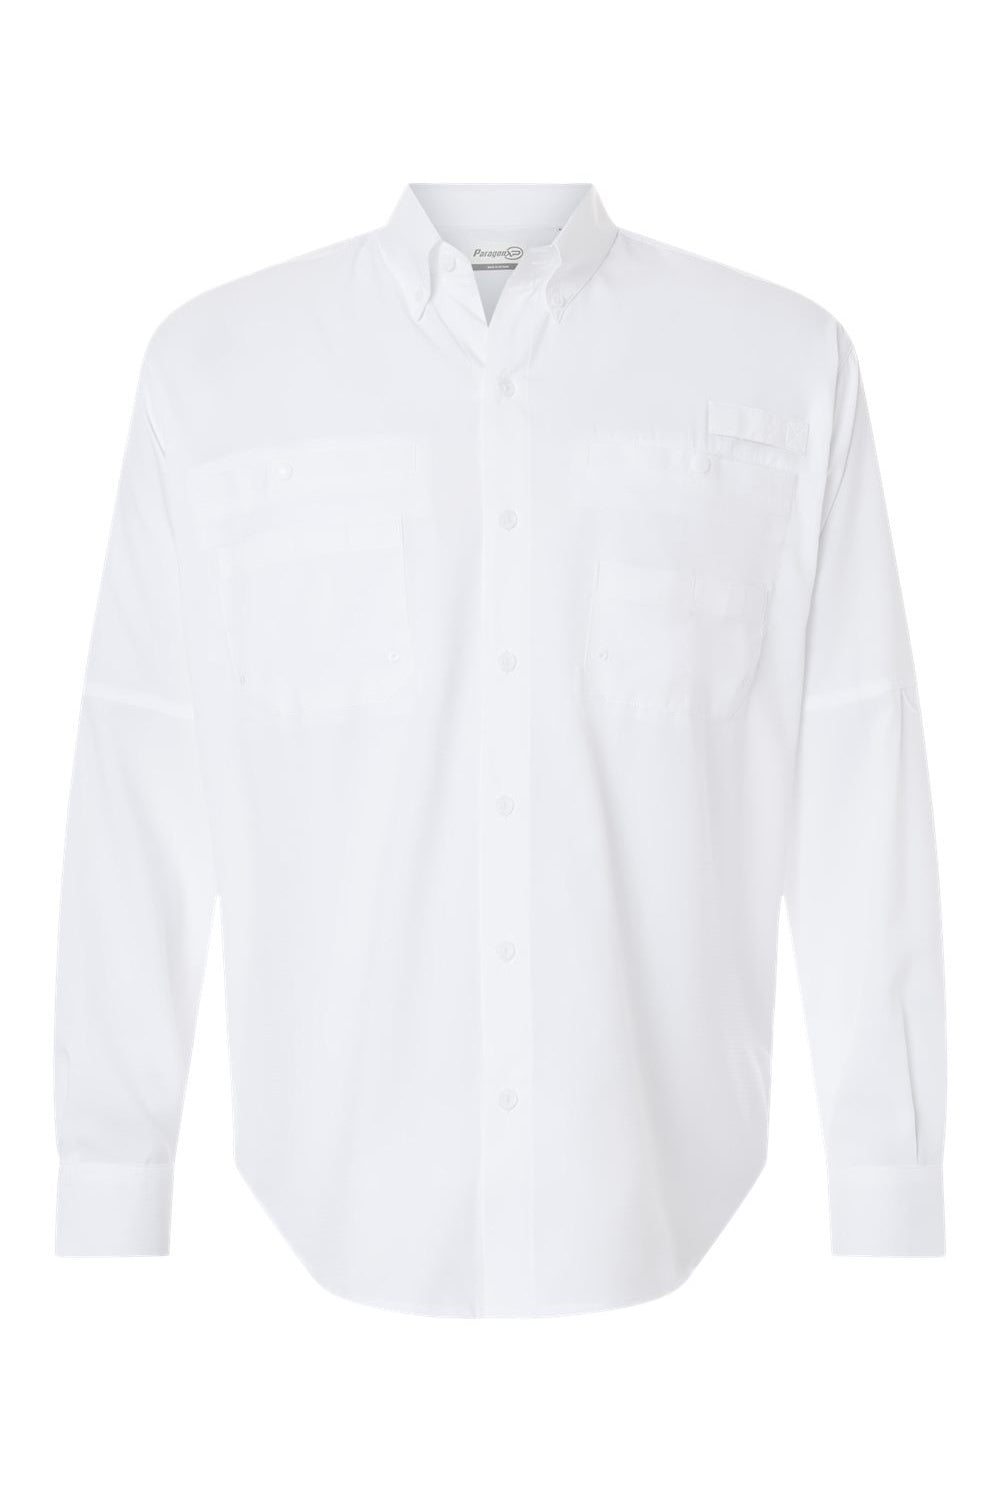 Paragon 702 Mens Kitty Hawk Performance Long Sleeve Button Down Shirt White Flat Front